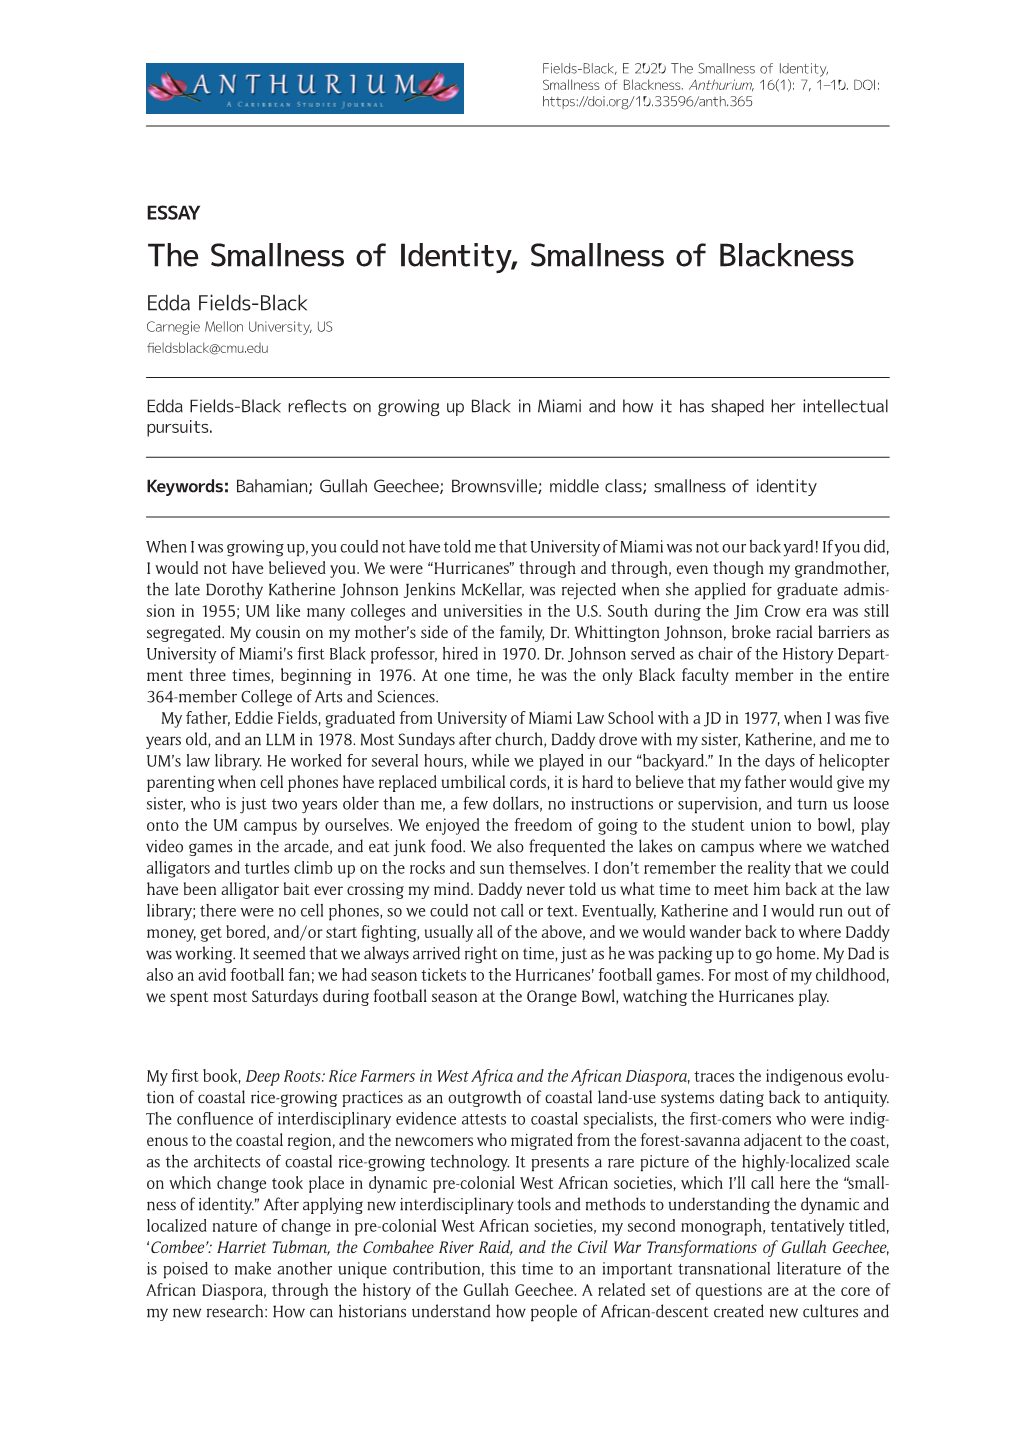 The Smallness of Identity, Smallness of Blackness